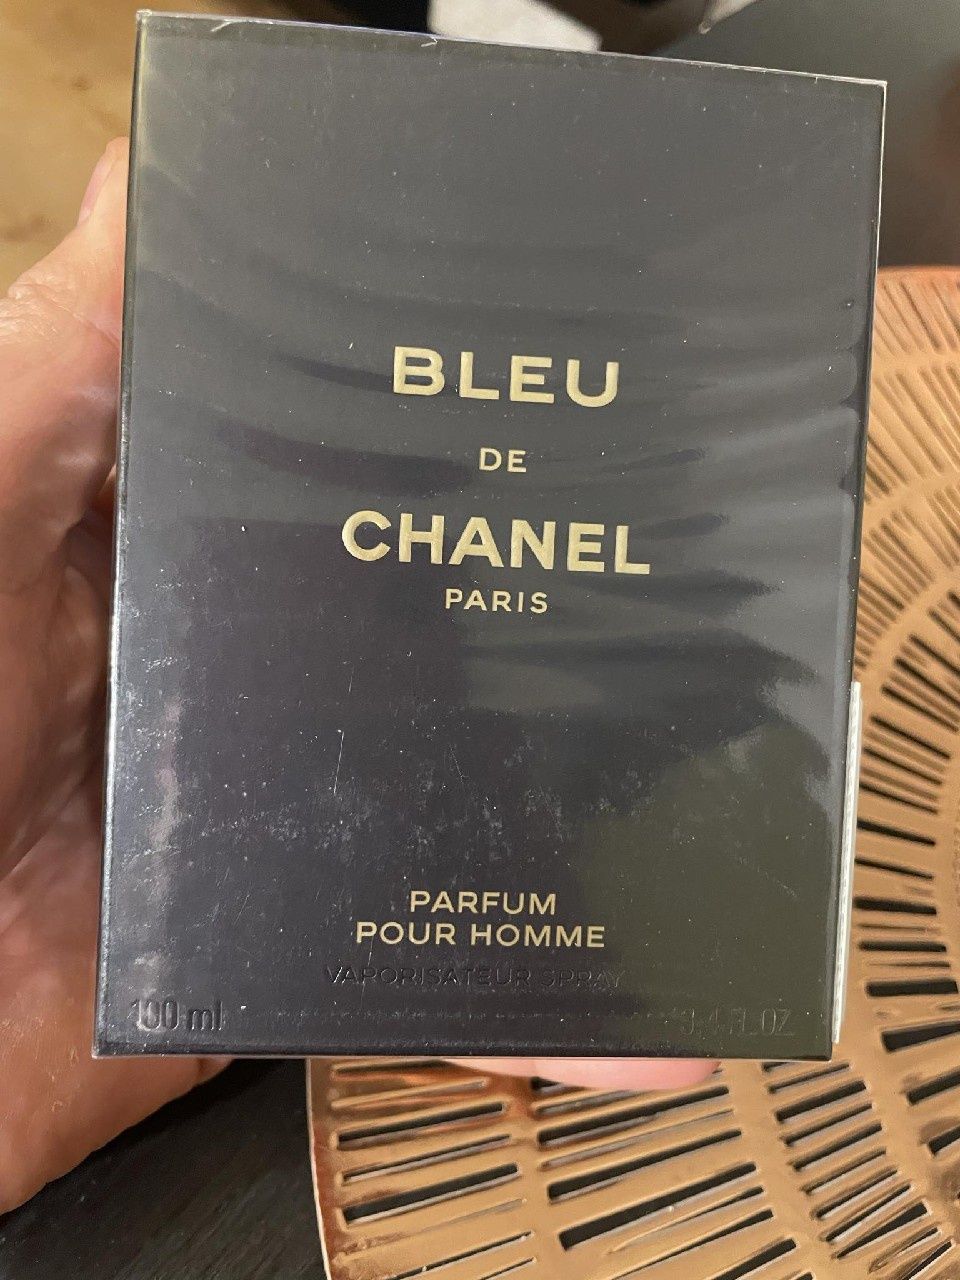 Chanel Bleu de Chanel Paris 100ml nowe